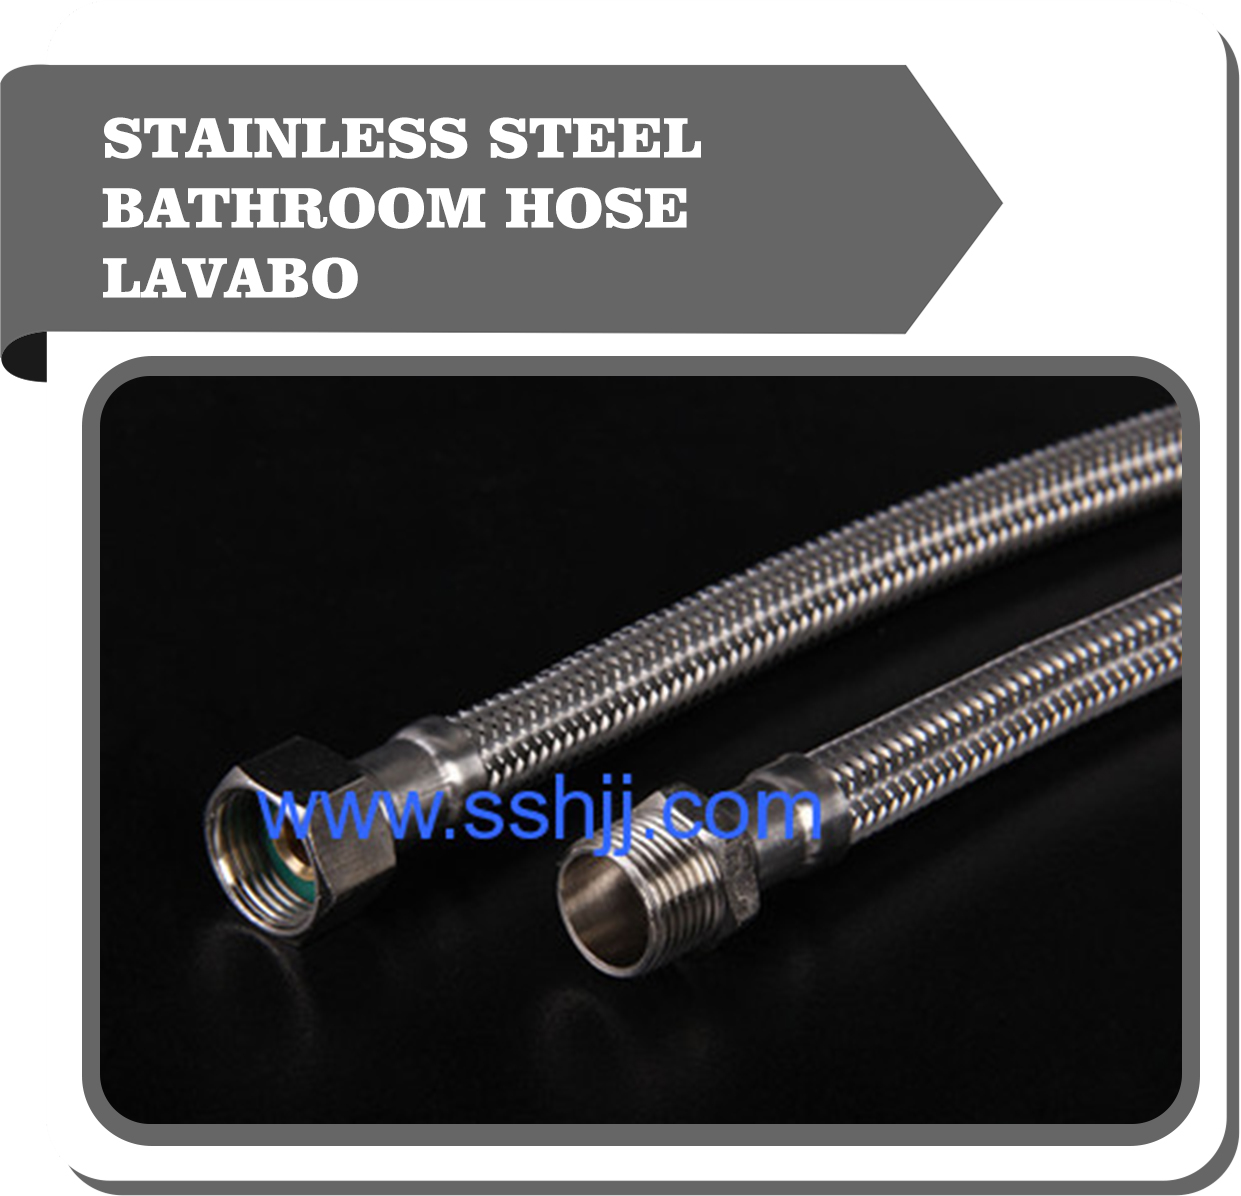 Stainless steel bathroom hose para lavabo